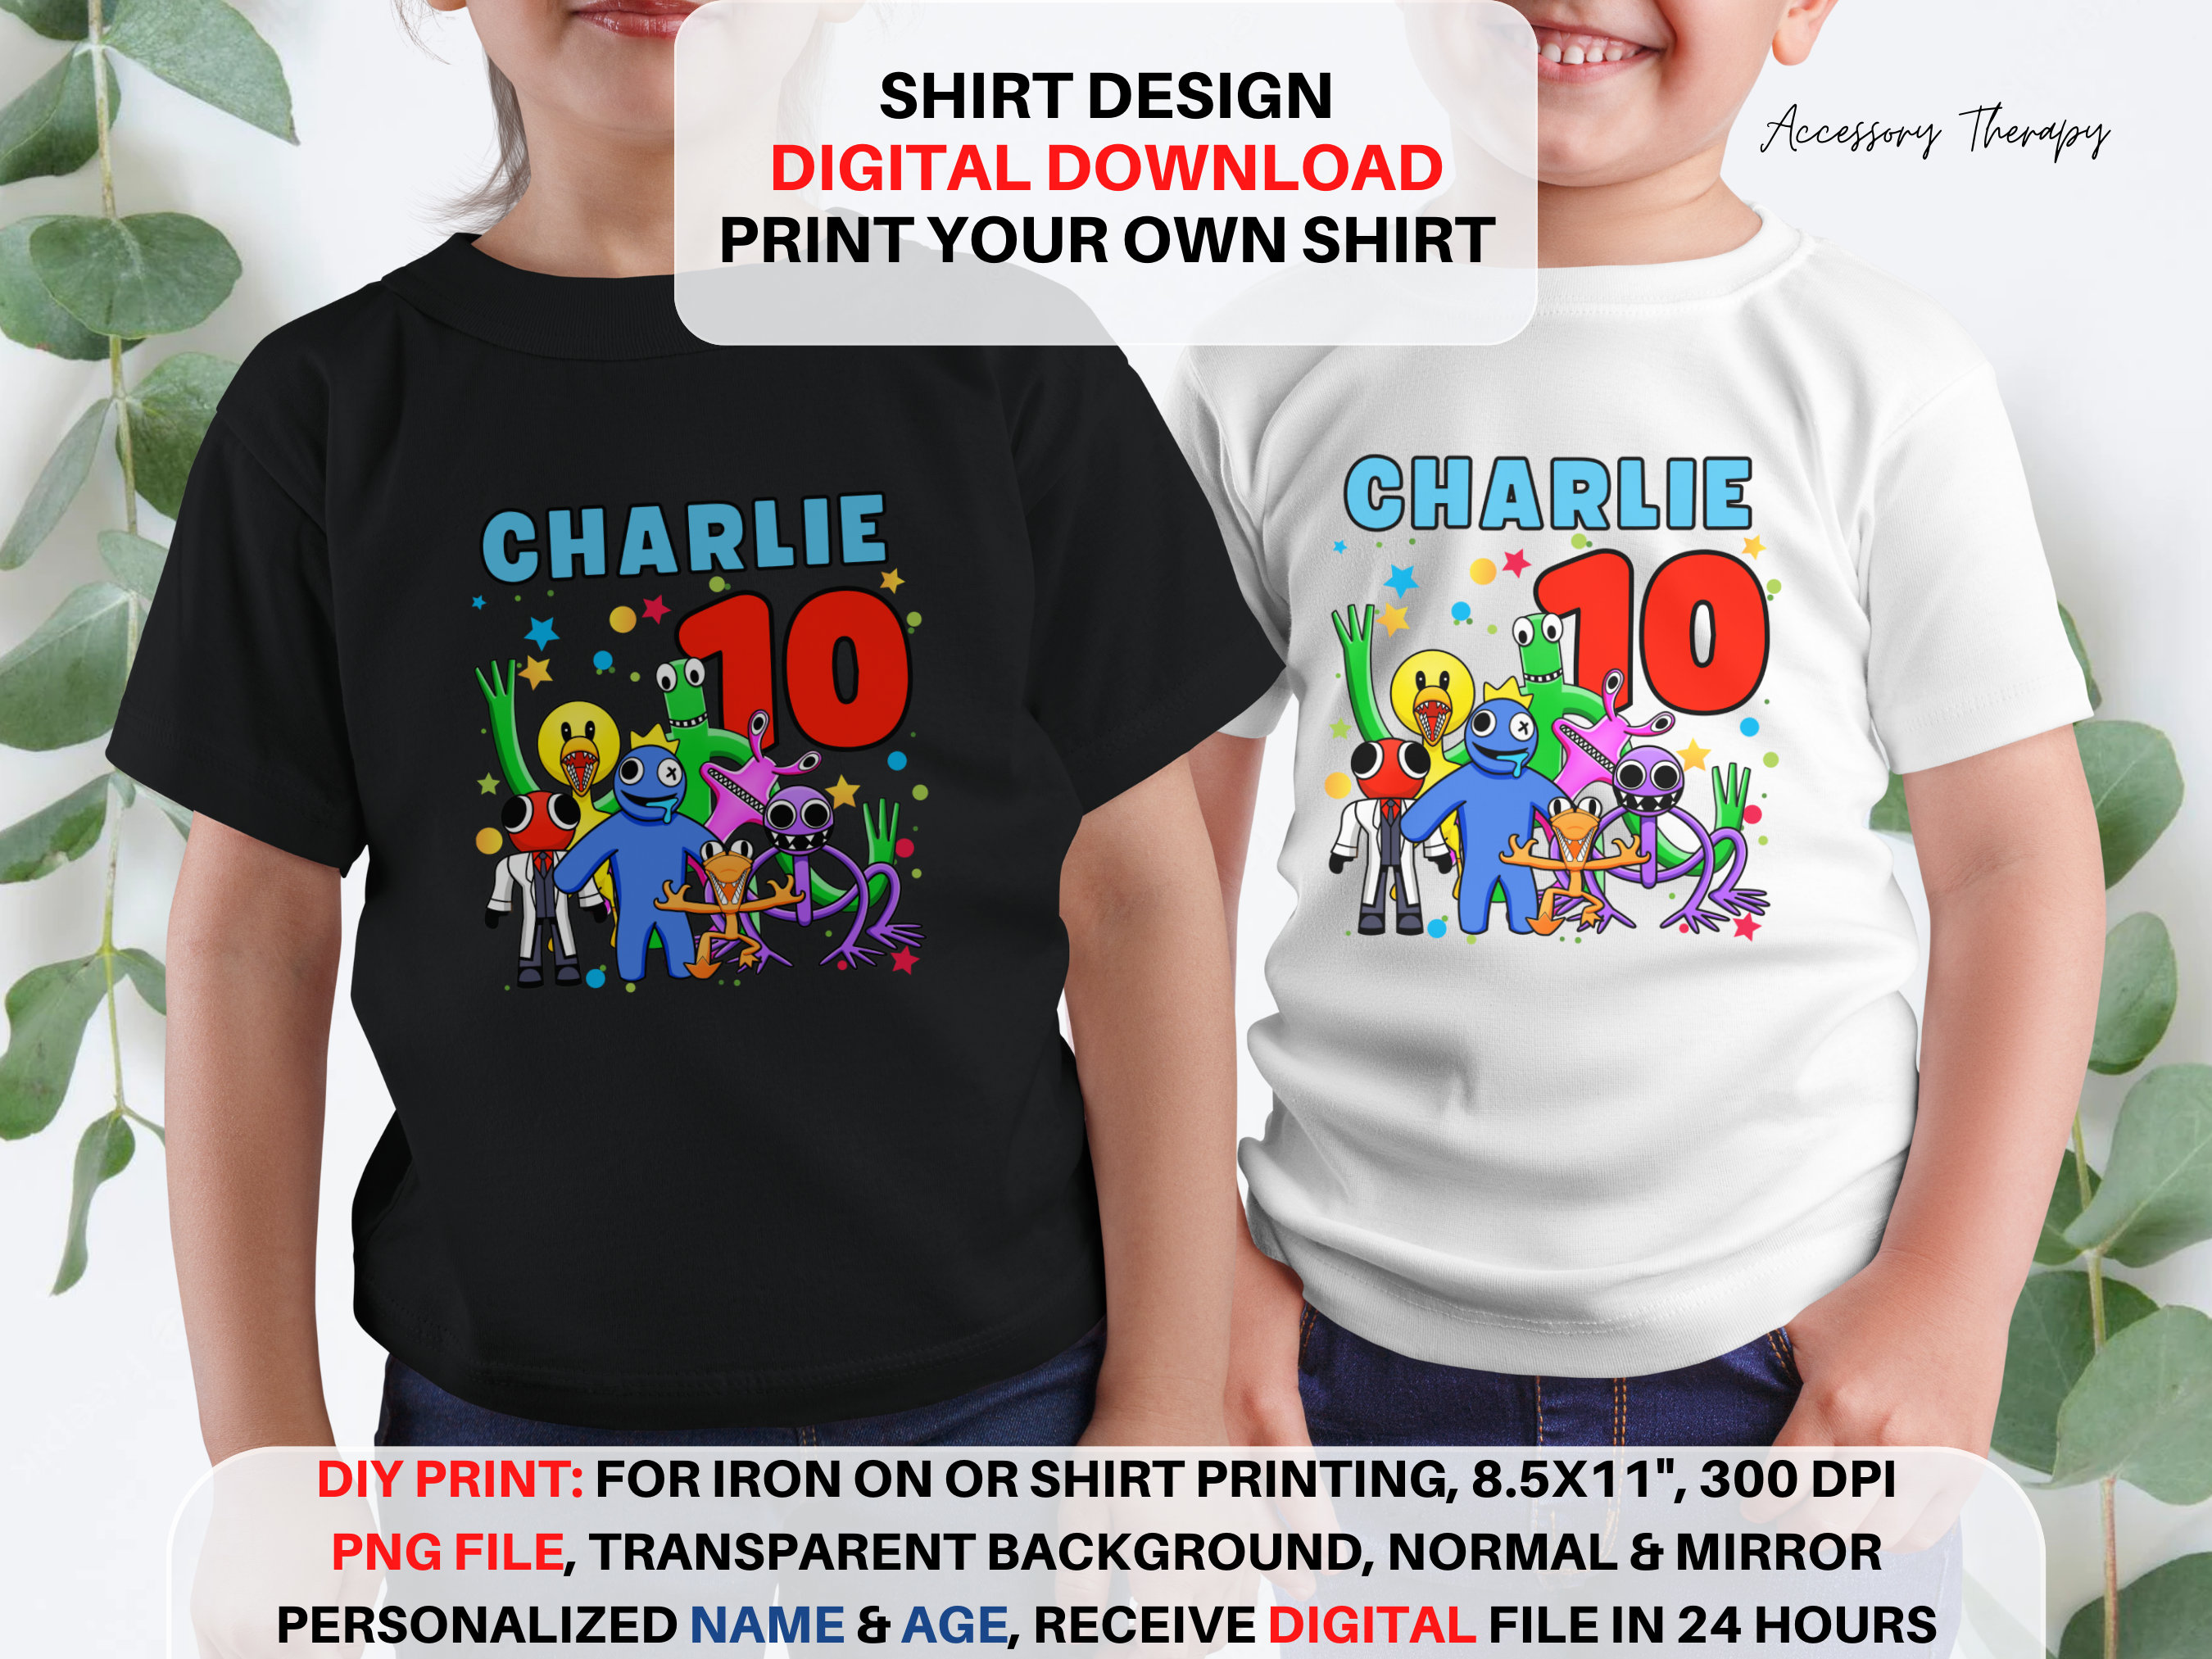 rainbow friends game Kids T-Shirt for Sale by lara-kli